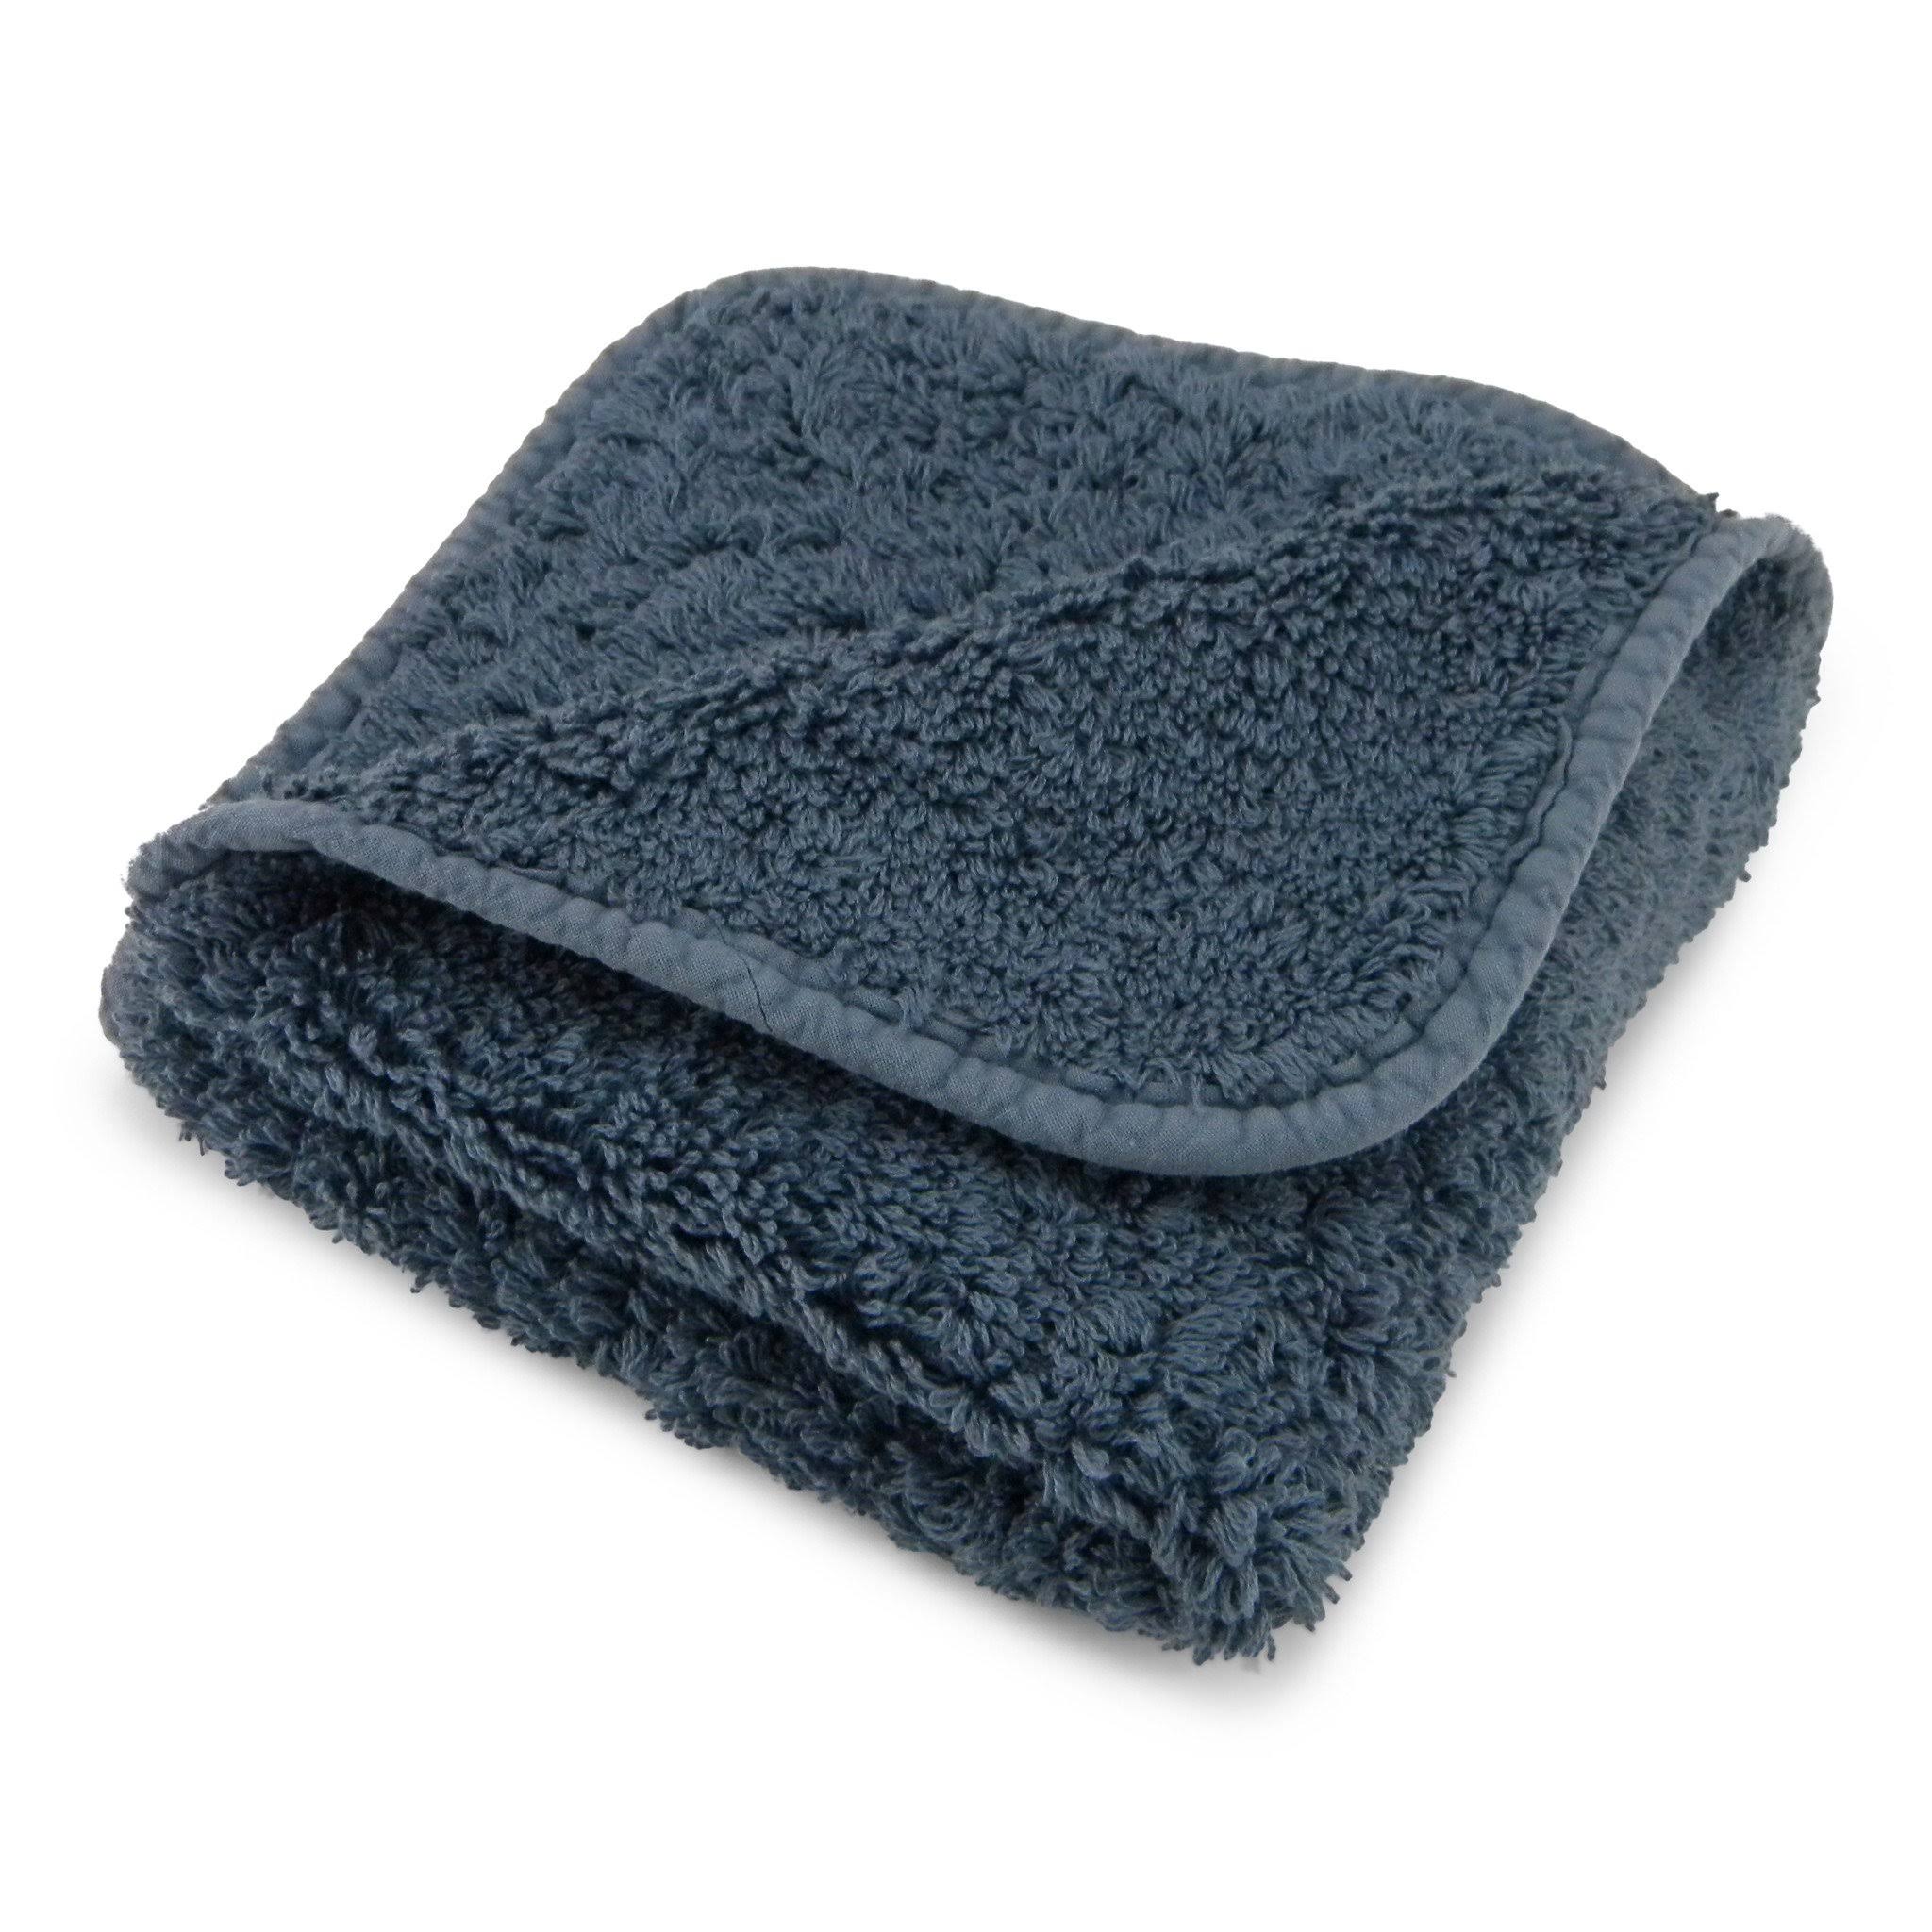 Abyss Super Pile Towels - Bath Towel 28x54" Denim 307